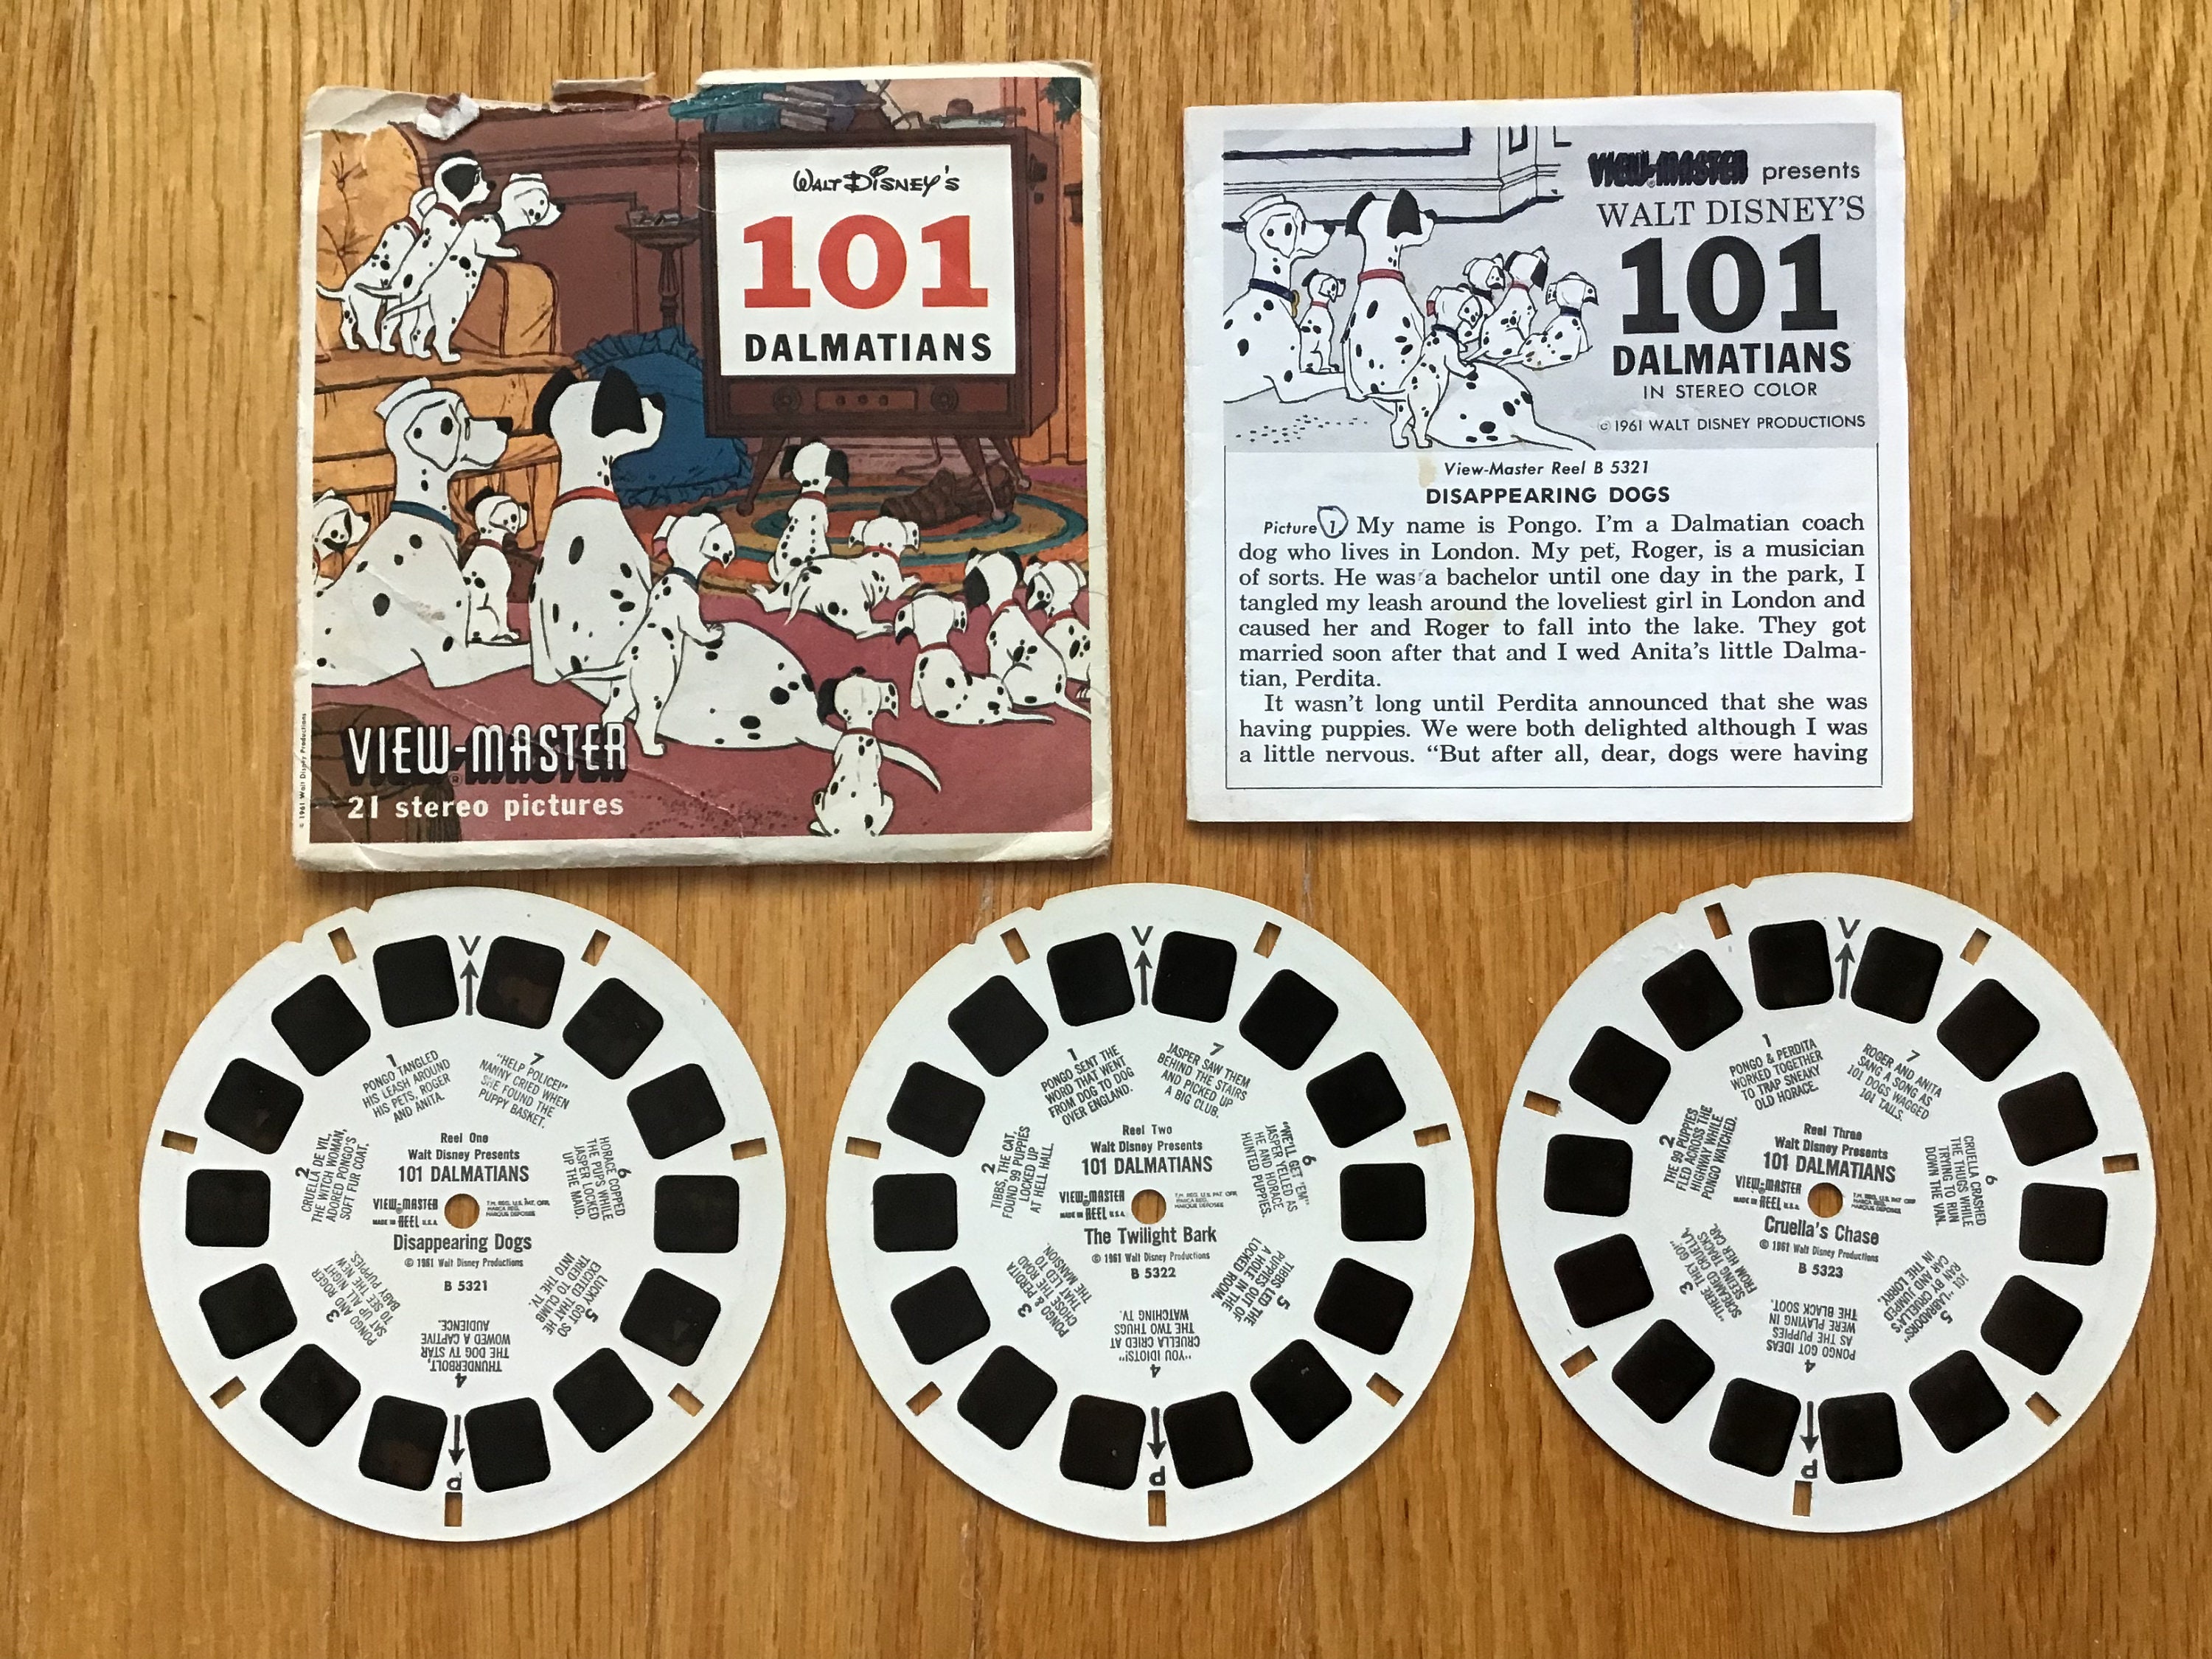 View-master Reels 101 Dalmatians in Original Package Viewmaster